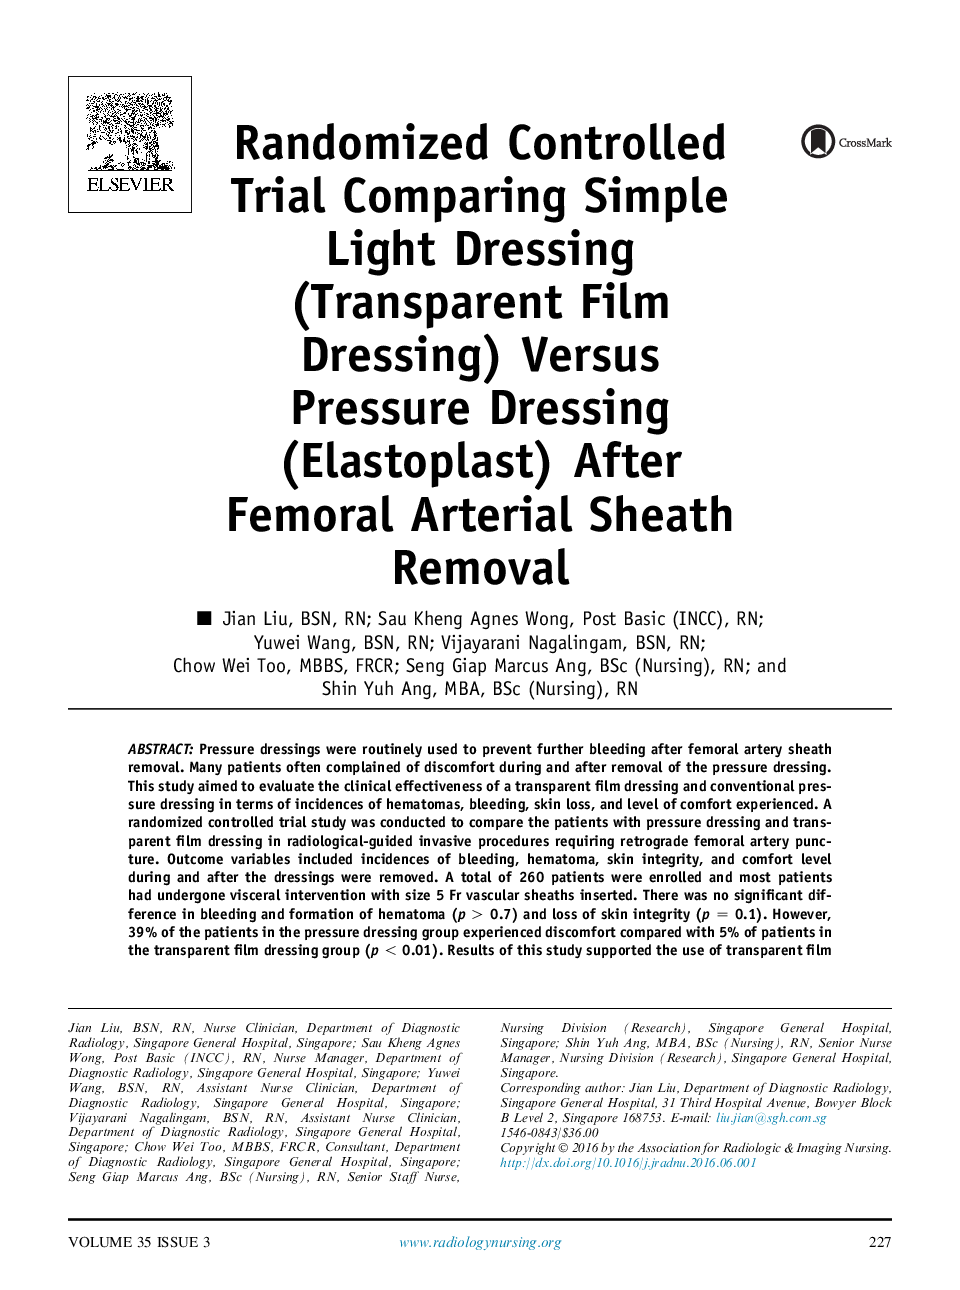 Randomized Controlled Trial Comparing Simple Light Dressing (Transparent Film Dressing) Versus Pressure Dressing (Elastoplast) After Femoral Arterial Sheath Removal